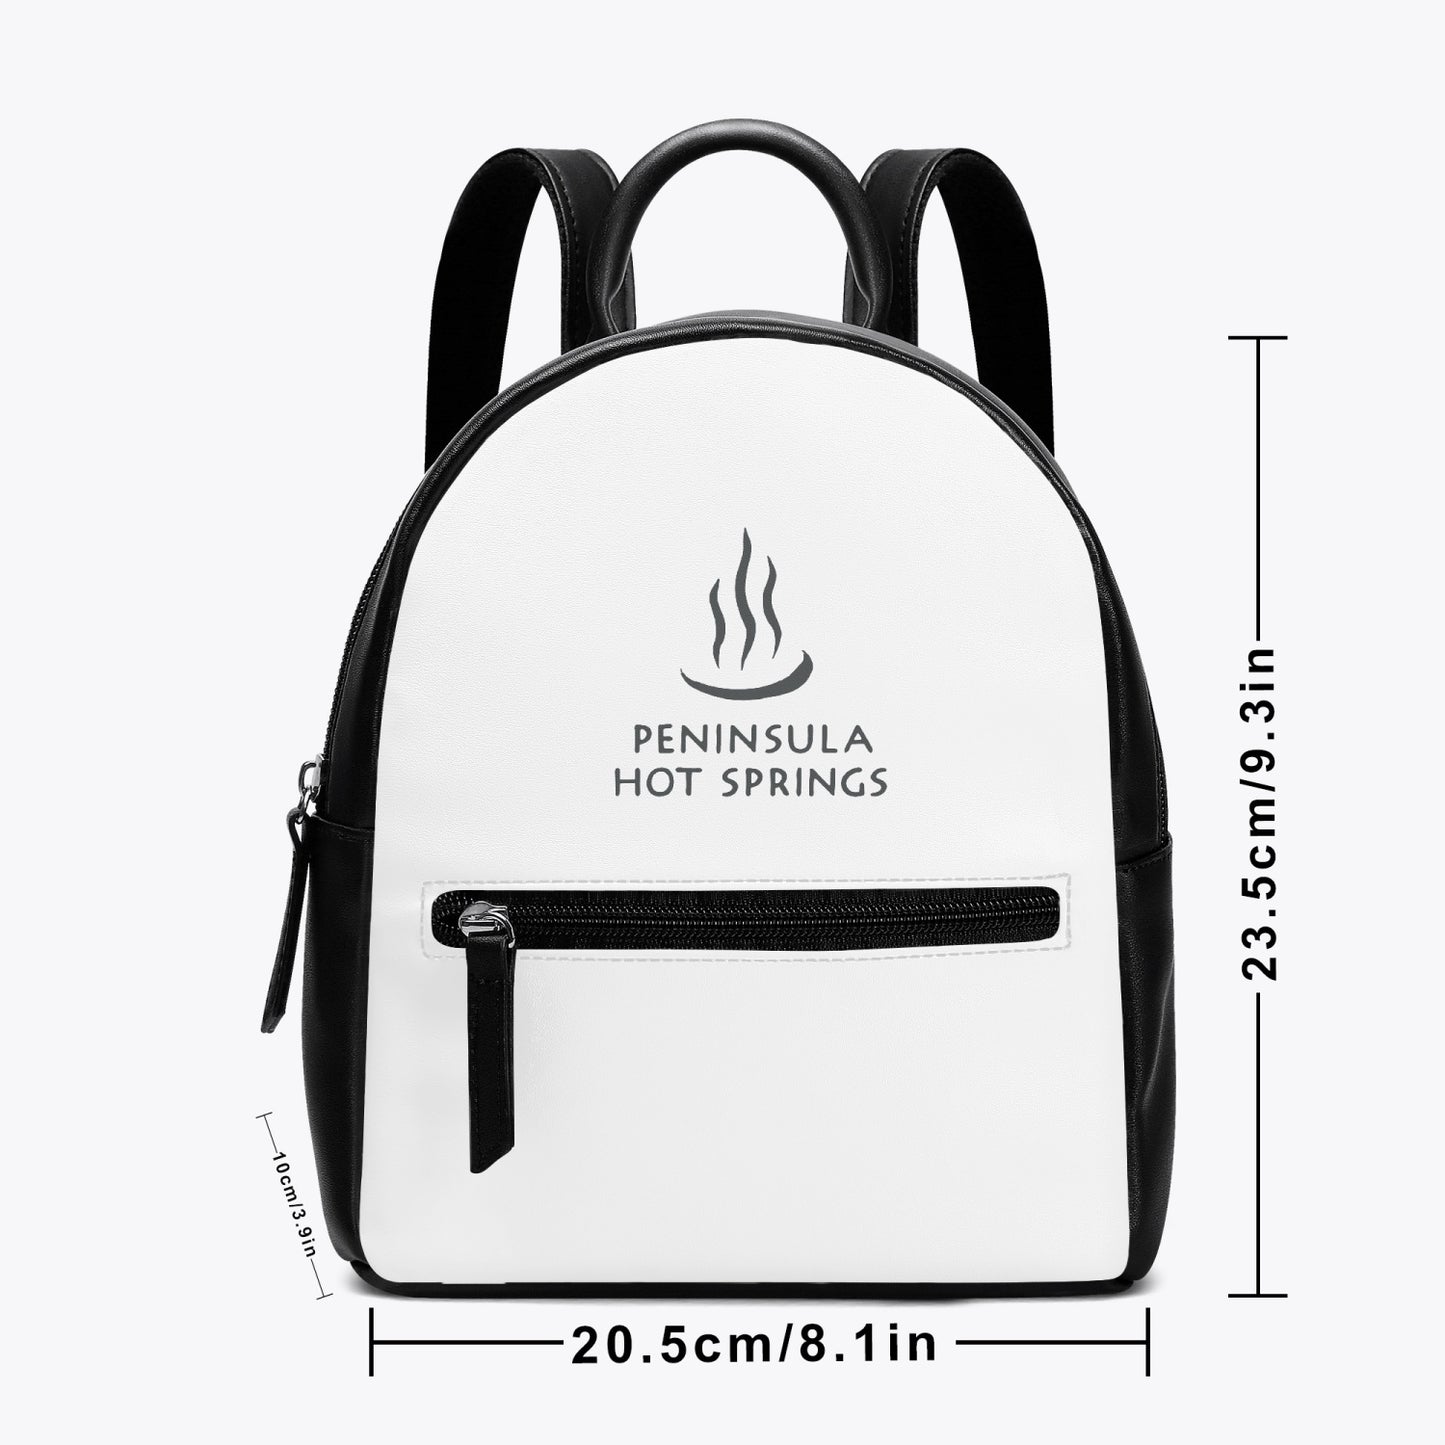 PENINSULAR HOT SPRINGS PU Leather Backpack